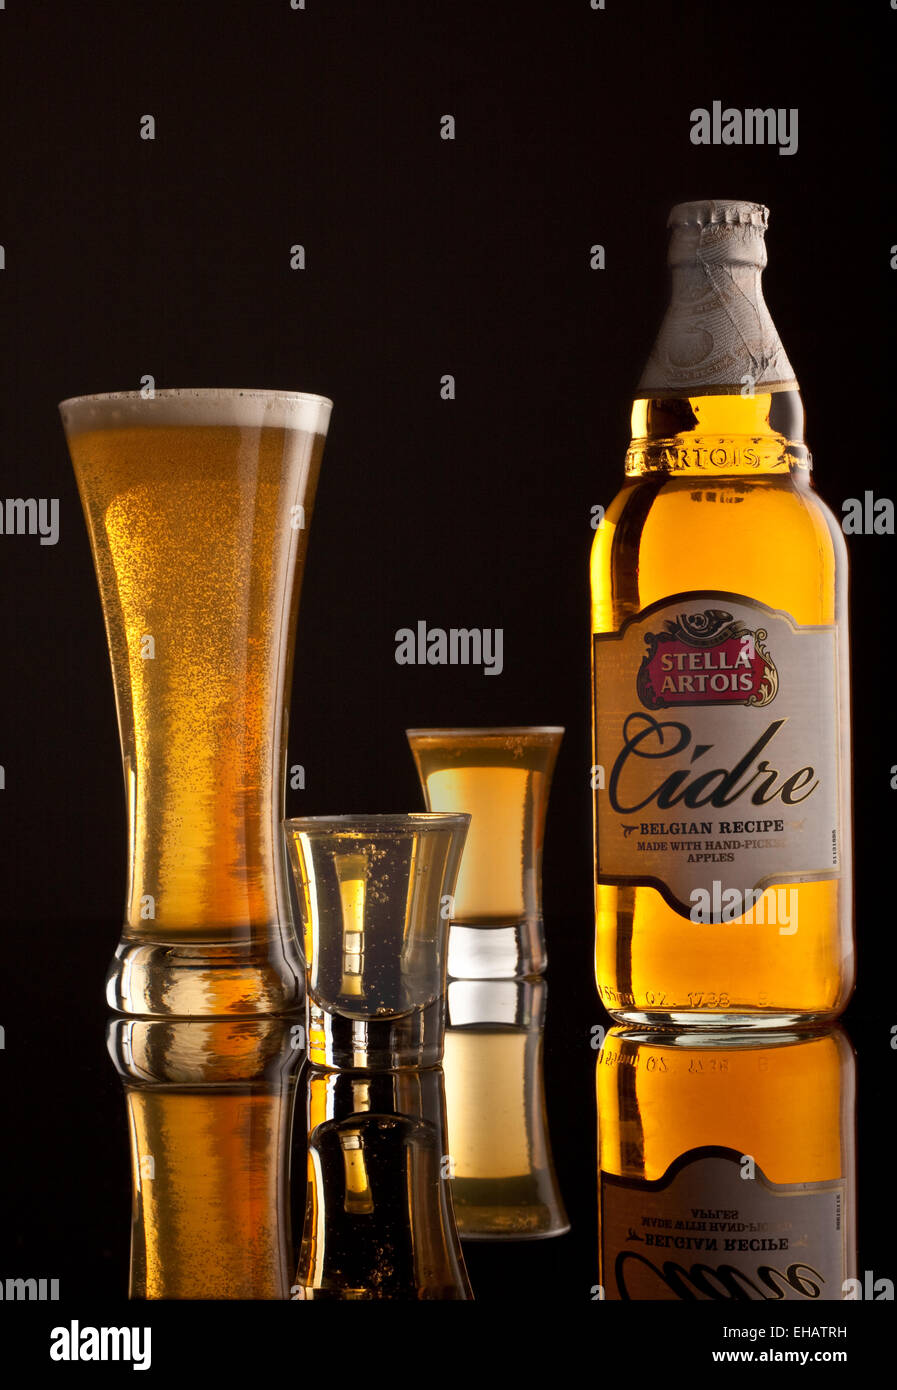 Bottle of Cidre/Cider and Glasses Stock Photo